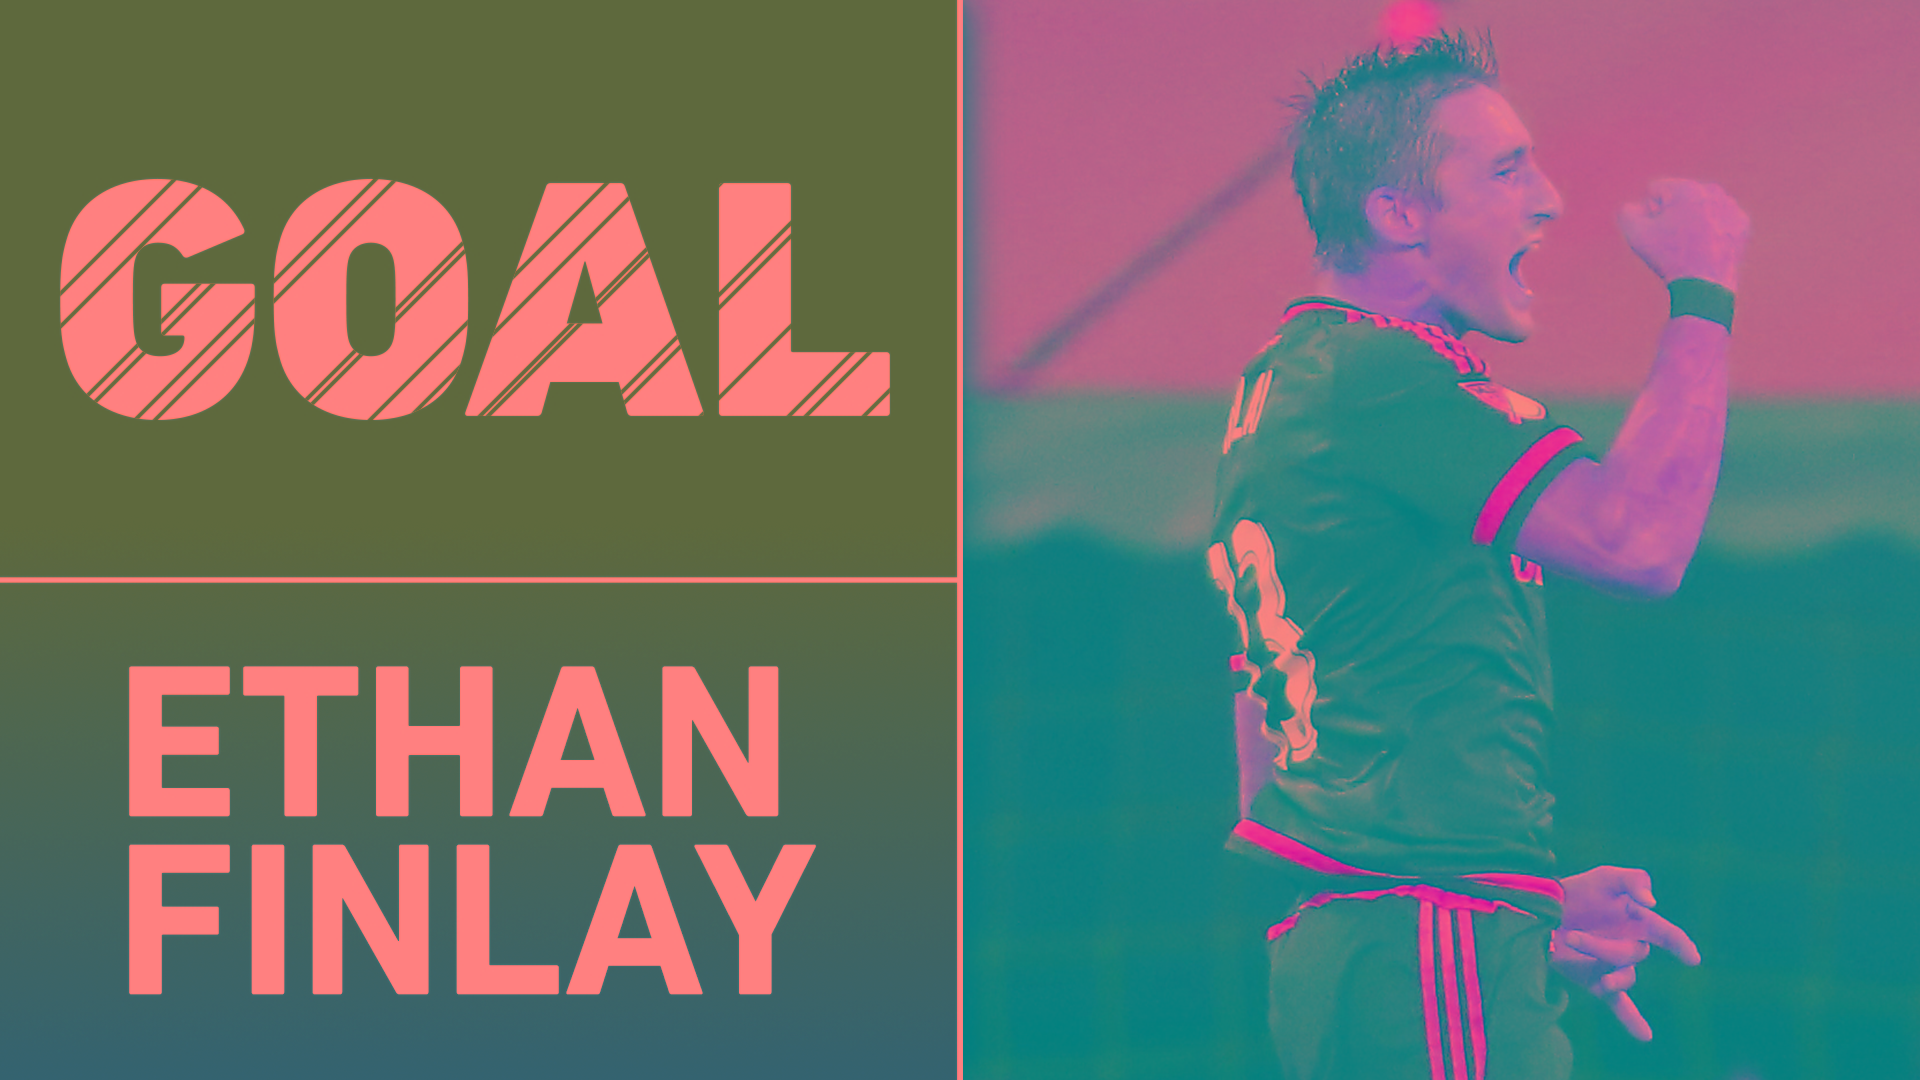 Video via MLS: Ola Kamara assists Finlay